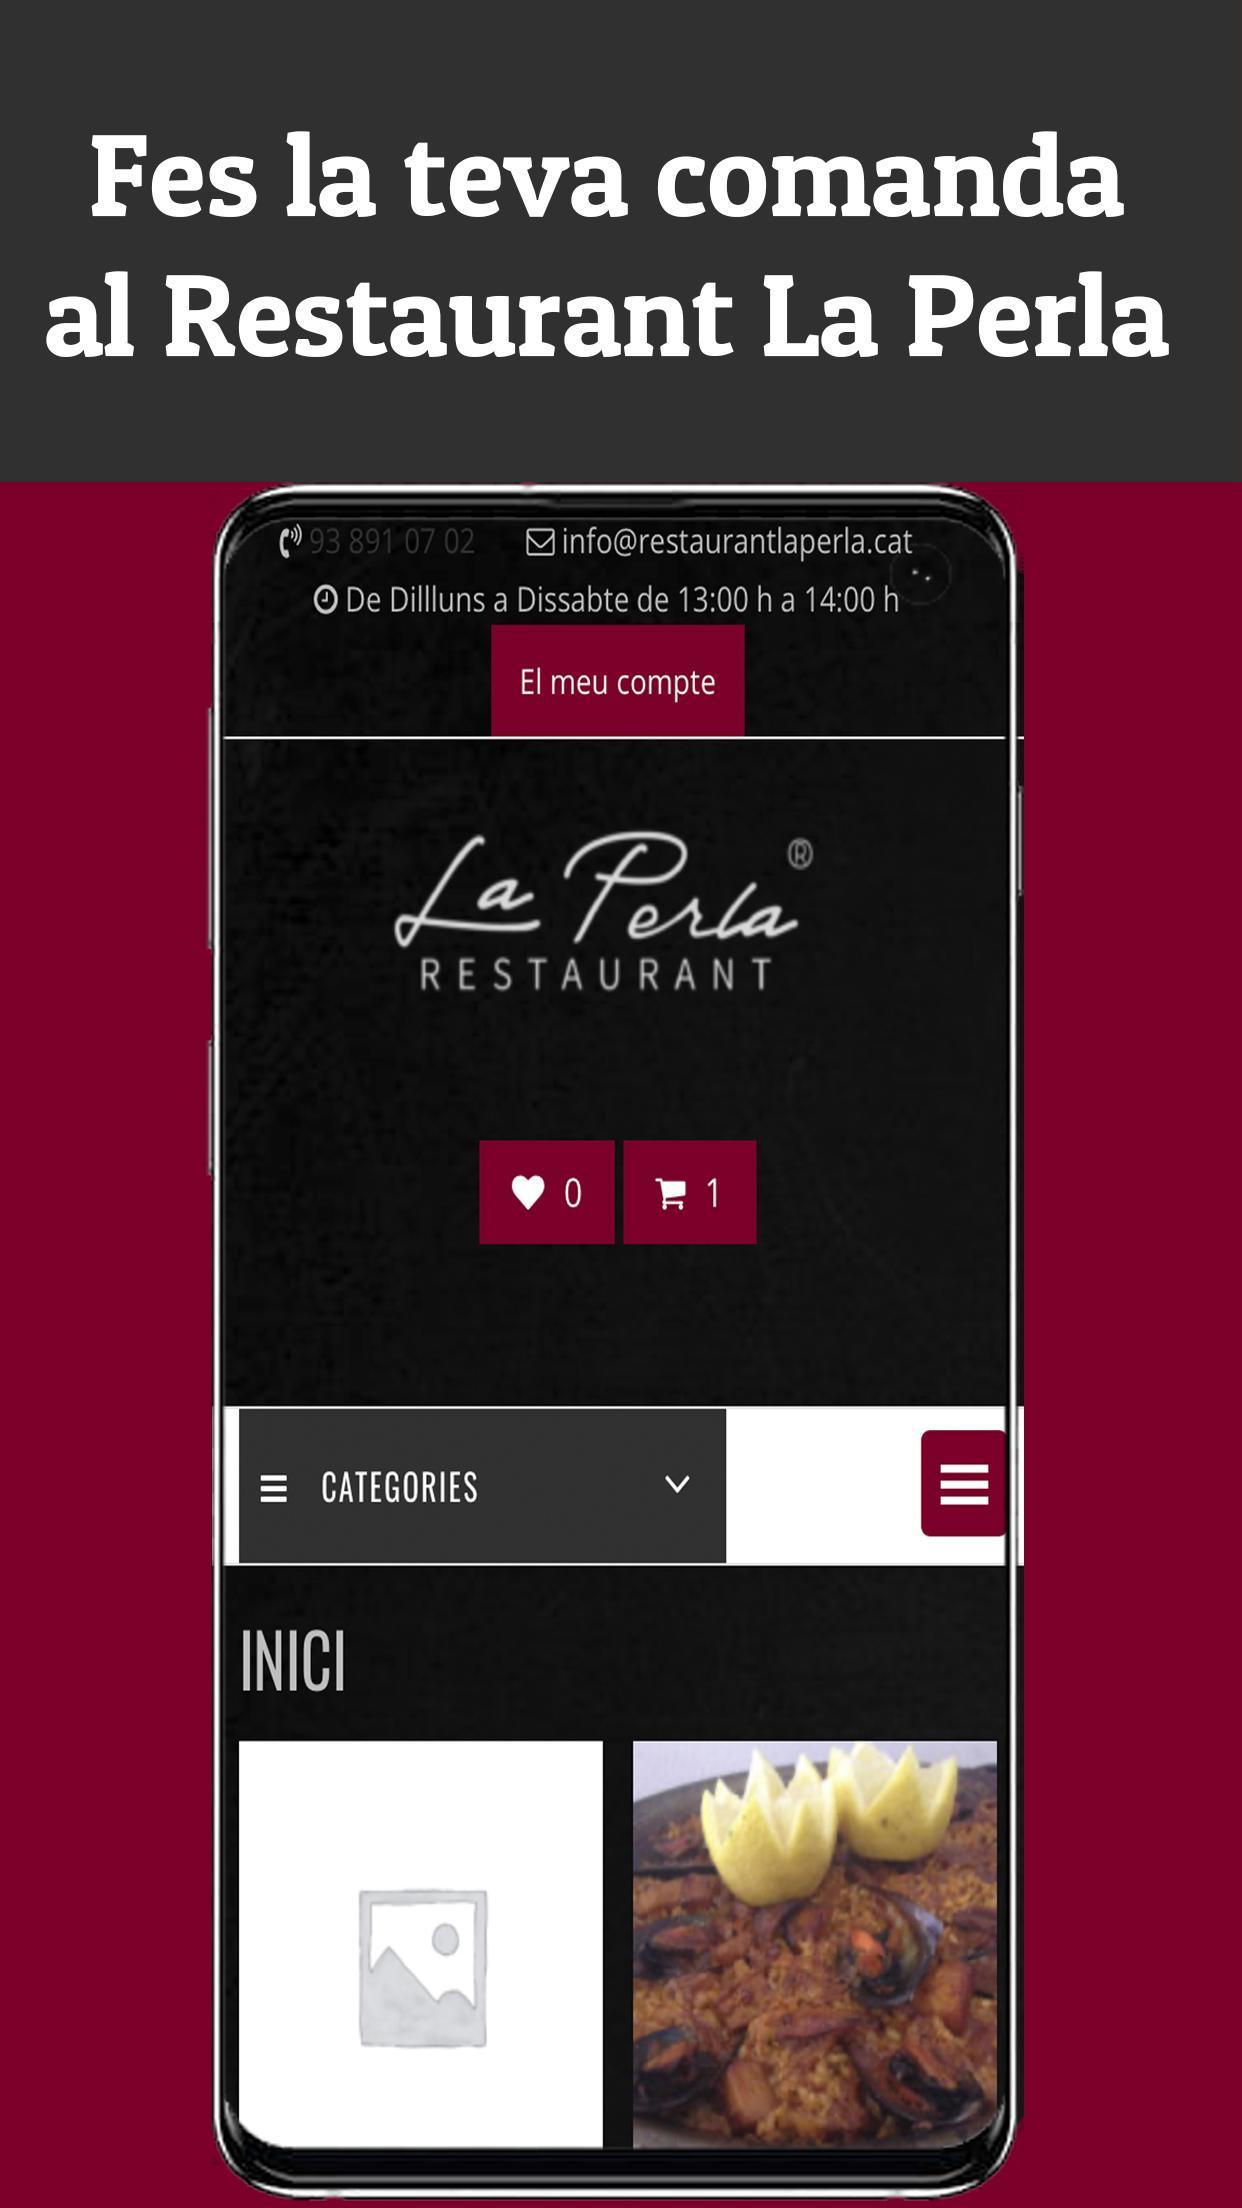 La Perla for Android - APK Download